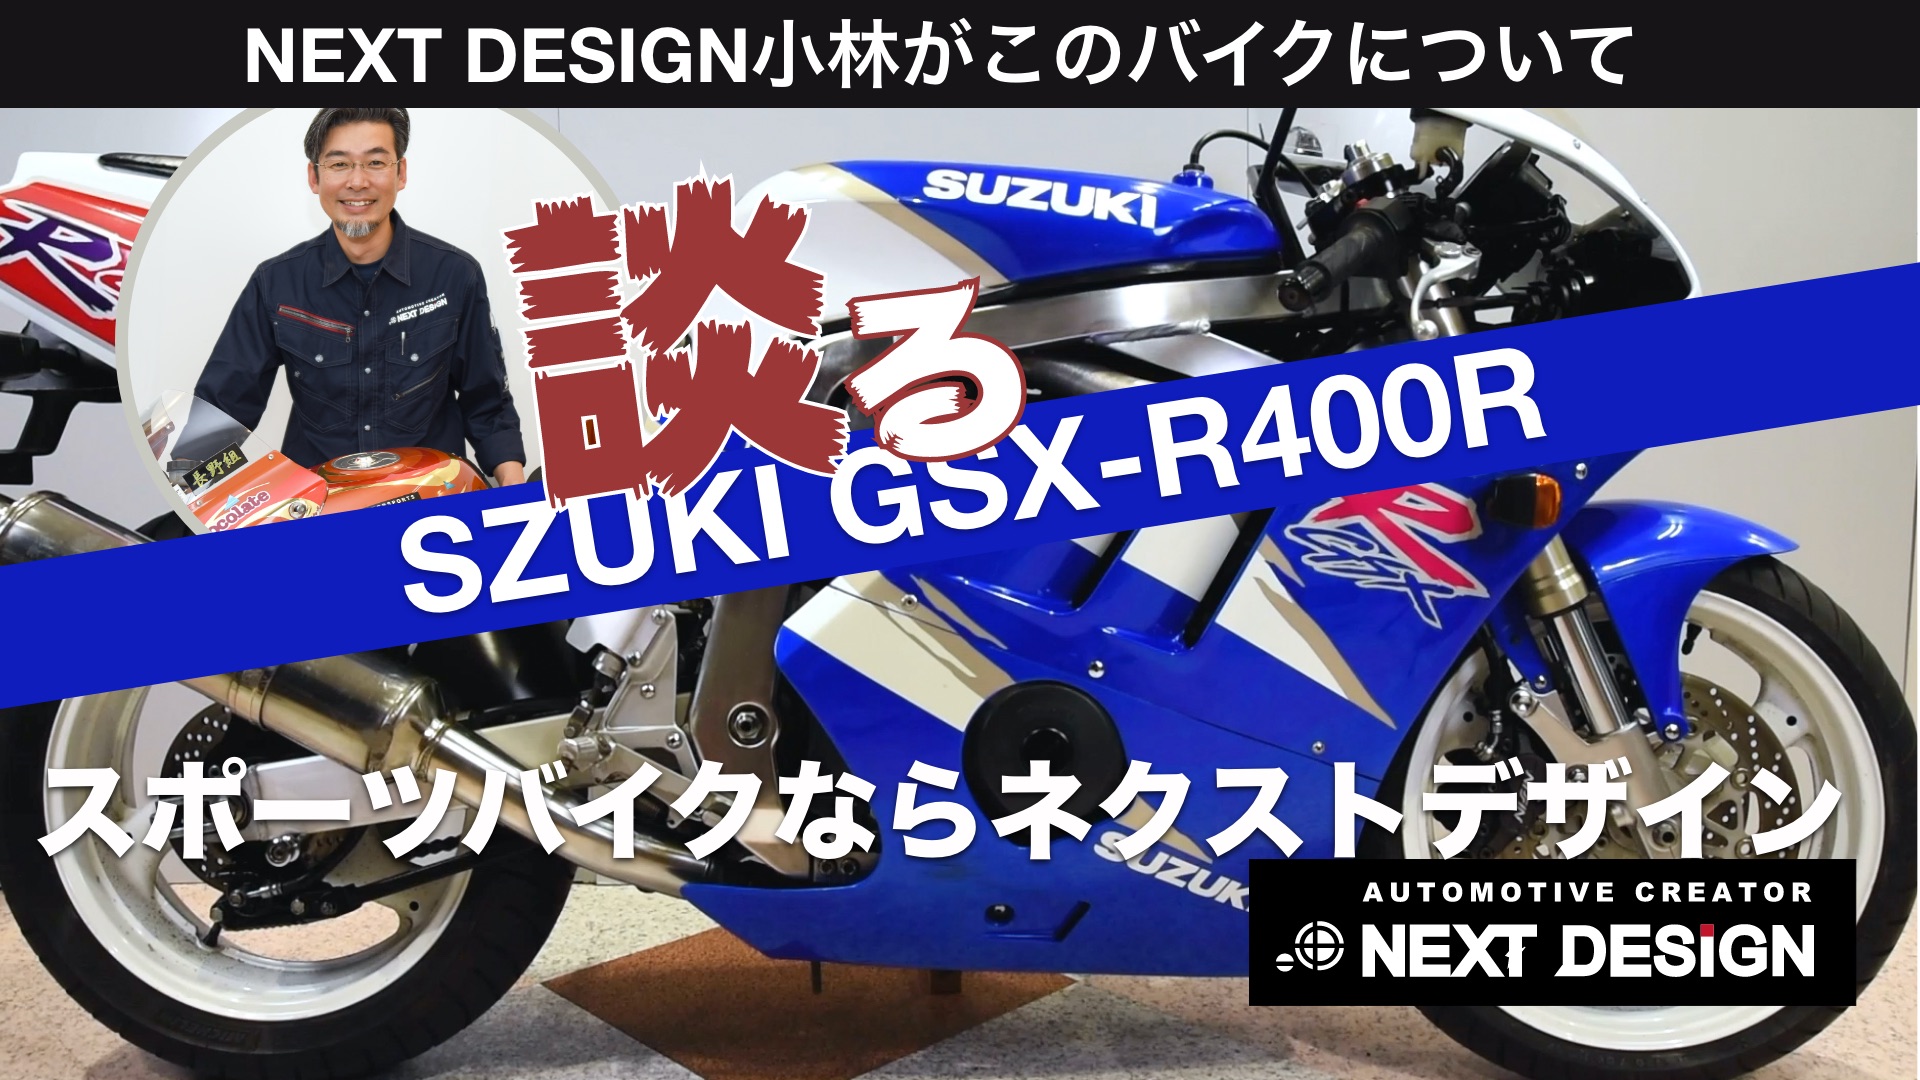 Next Design小林がバイクについて談る動画 ネクストデザイン オフィシャルサイト